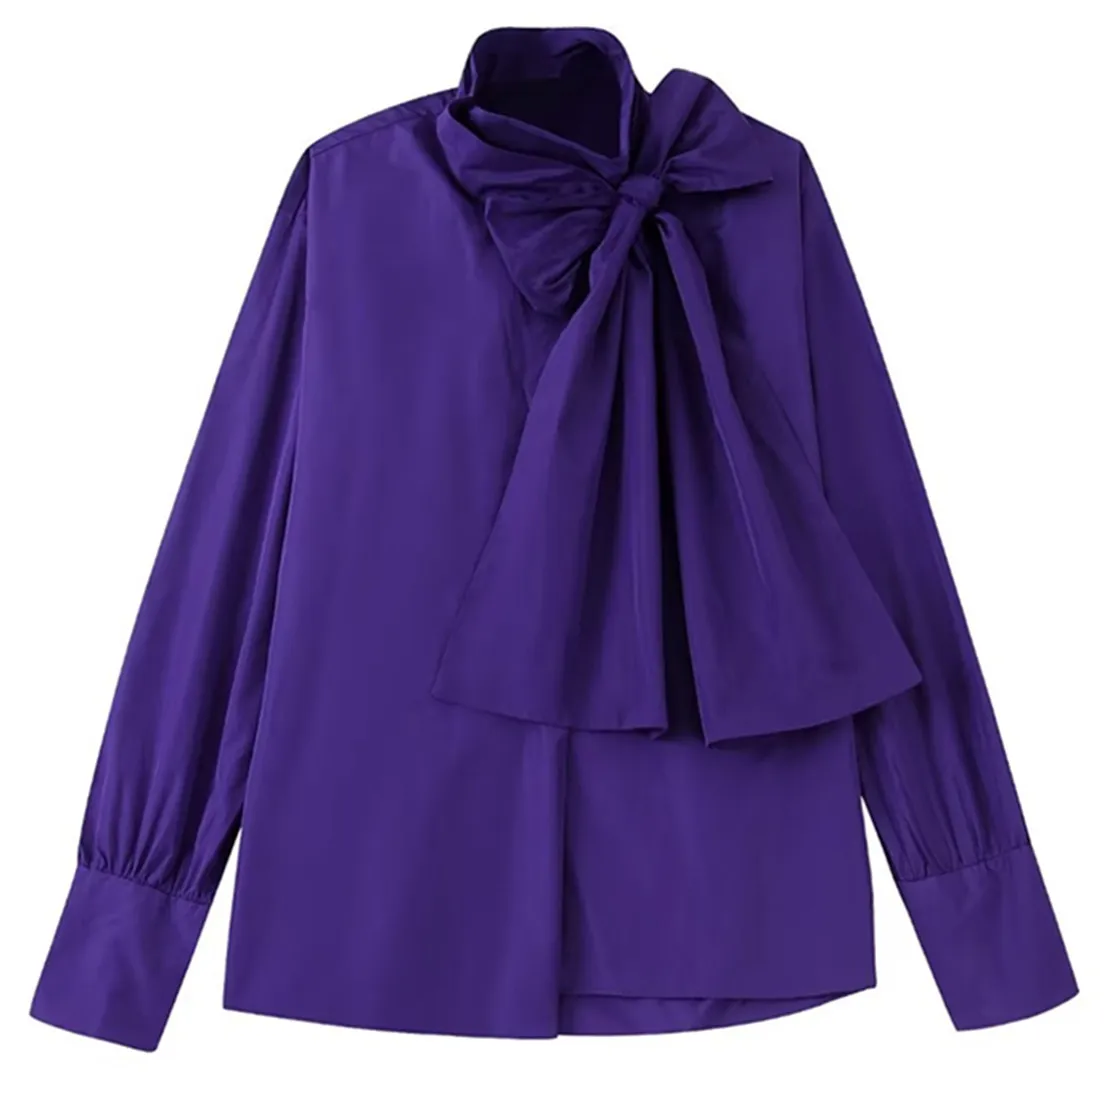 Maxdutti French Style Fashion Purple Bow Turtleneck Elegant Blouse Women Casual Autumn Shirt Tops